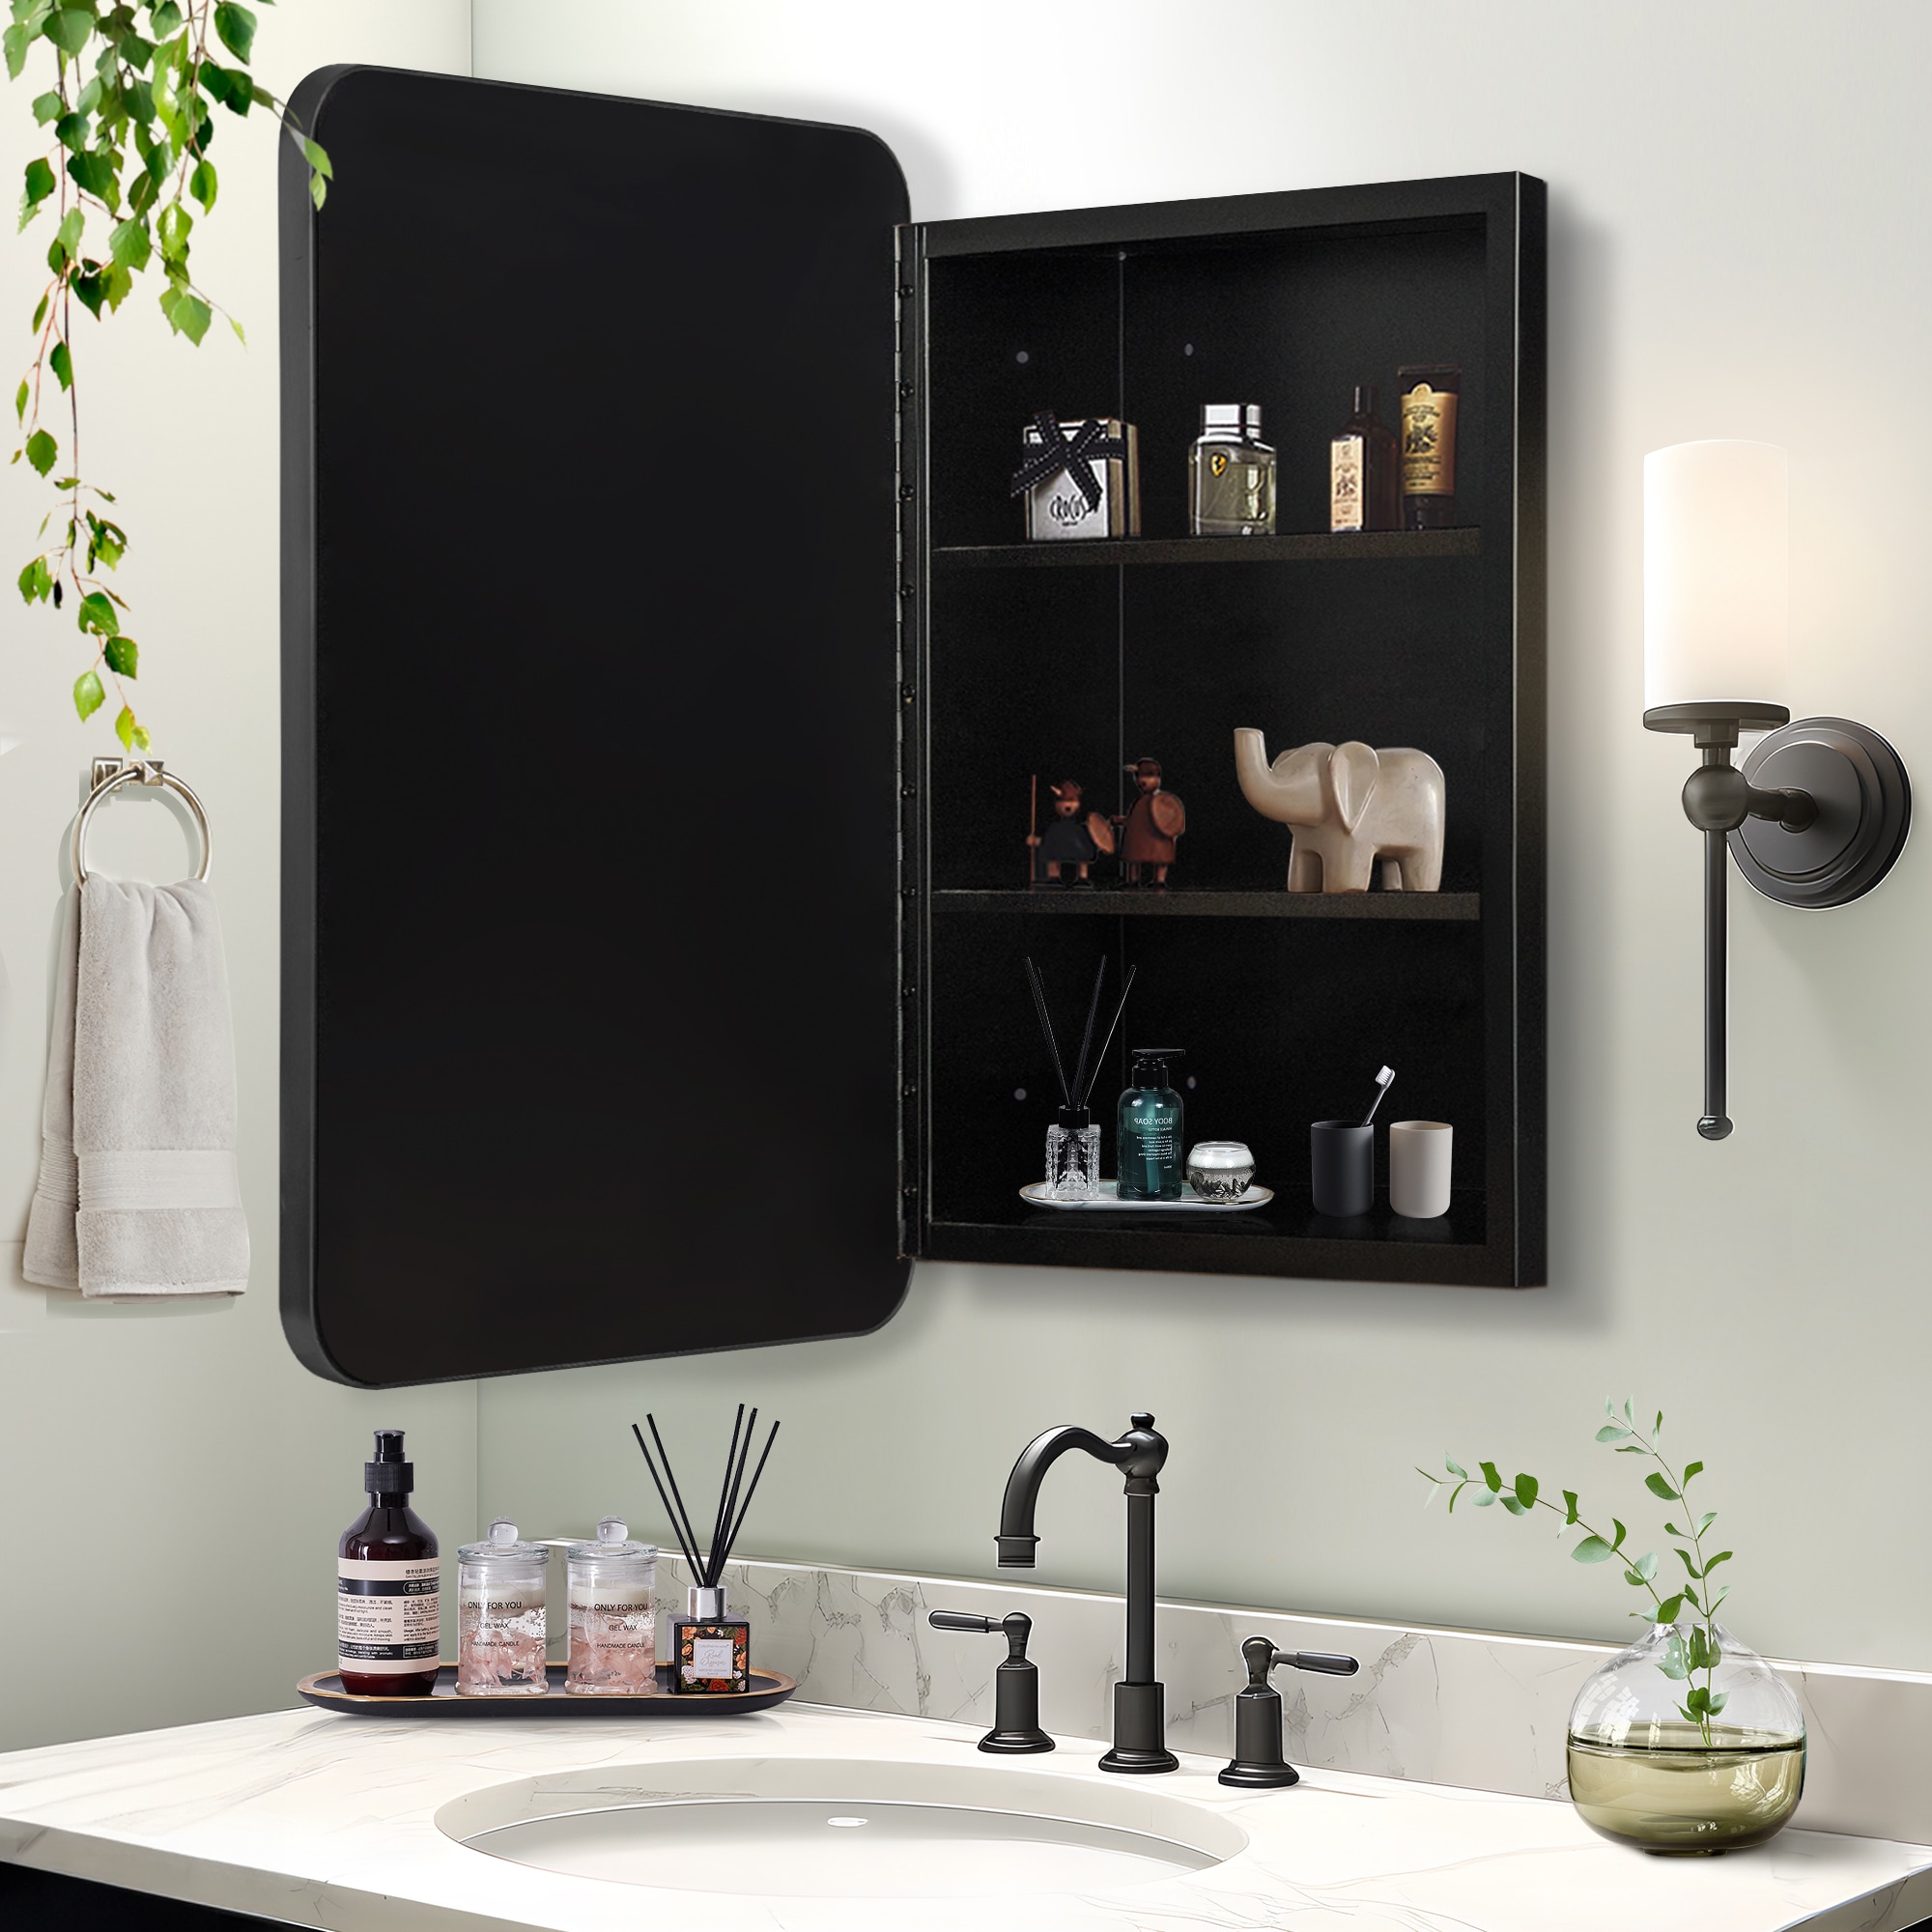 Mirrored Countertop Medicine Cabinet Between Sinks - Transitional